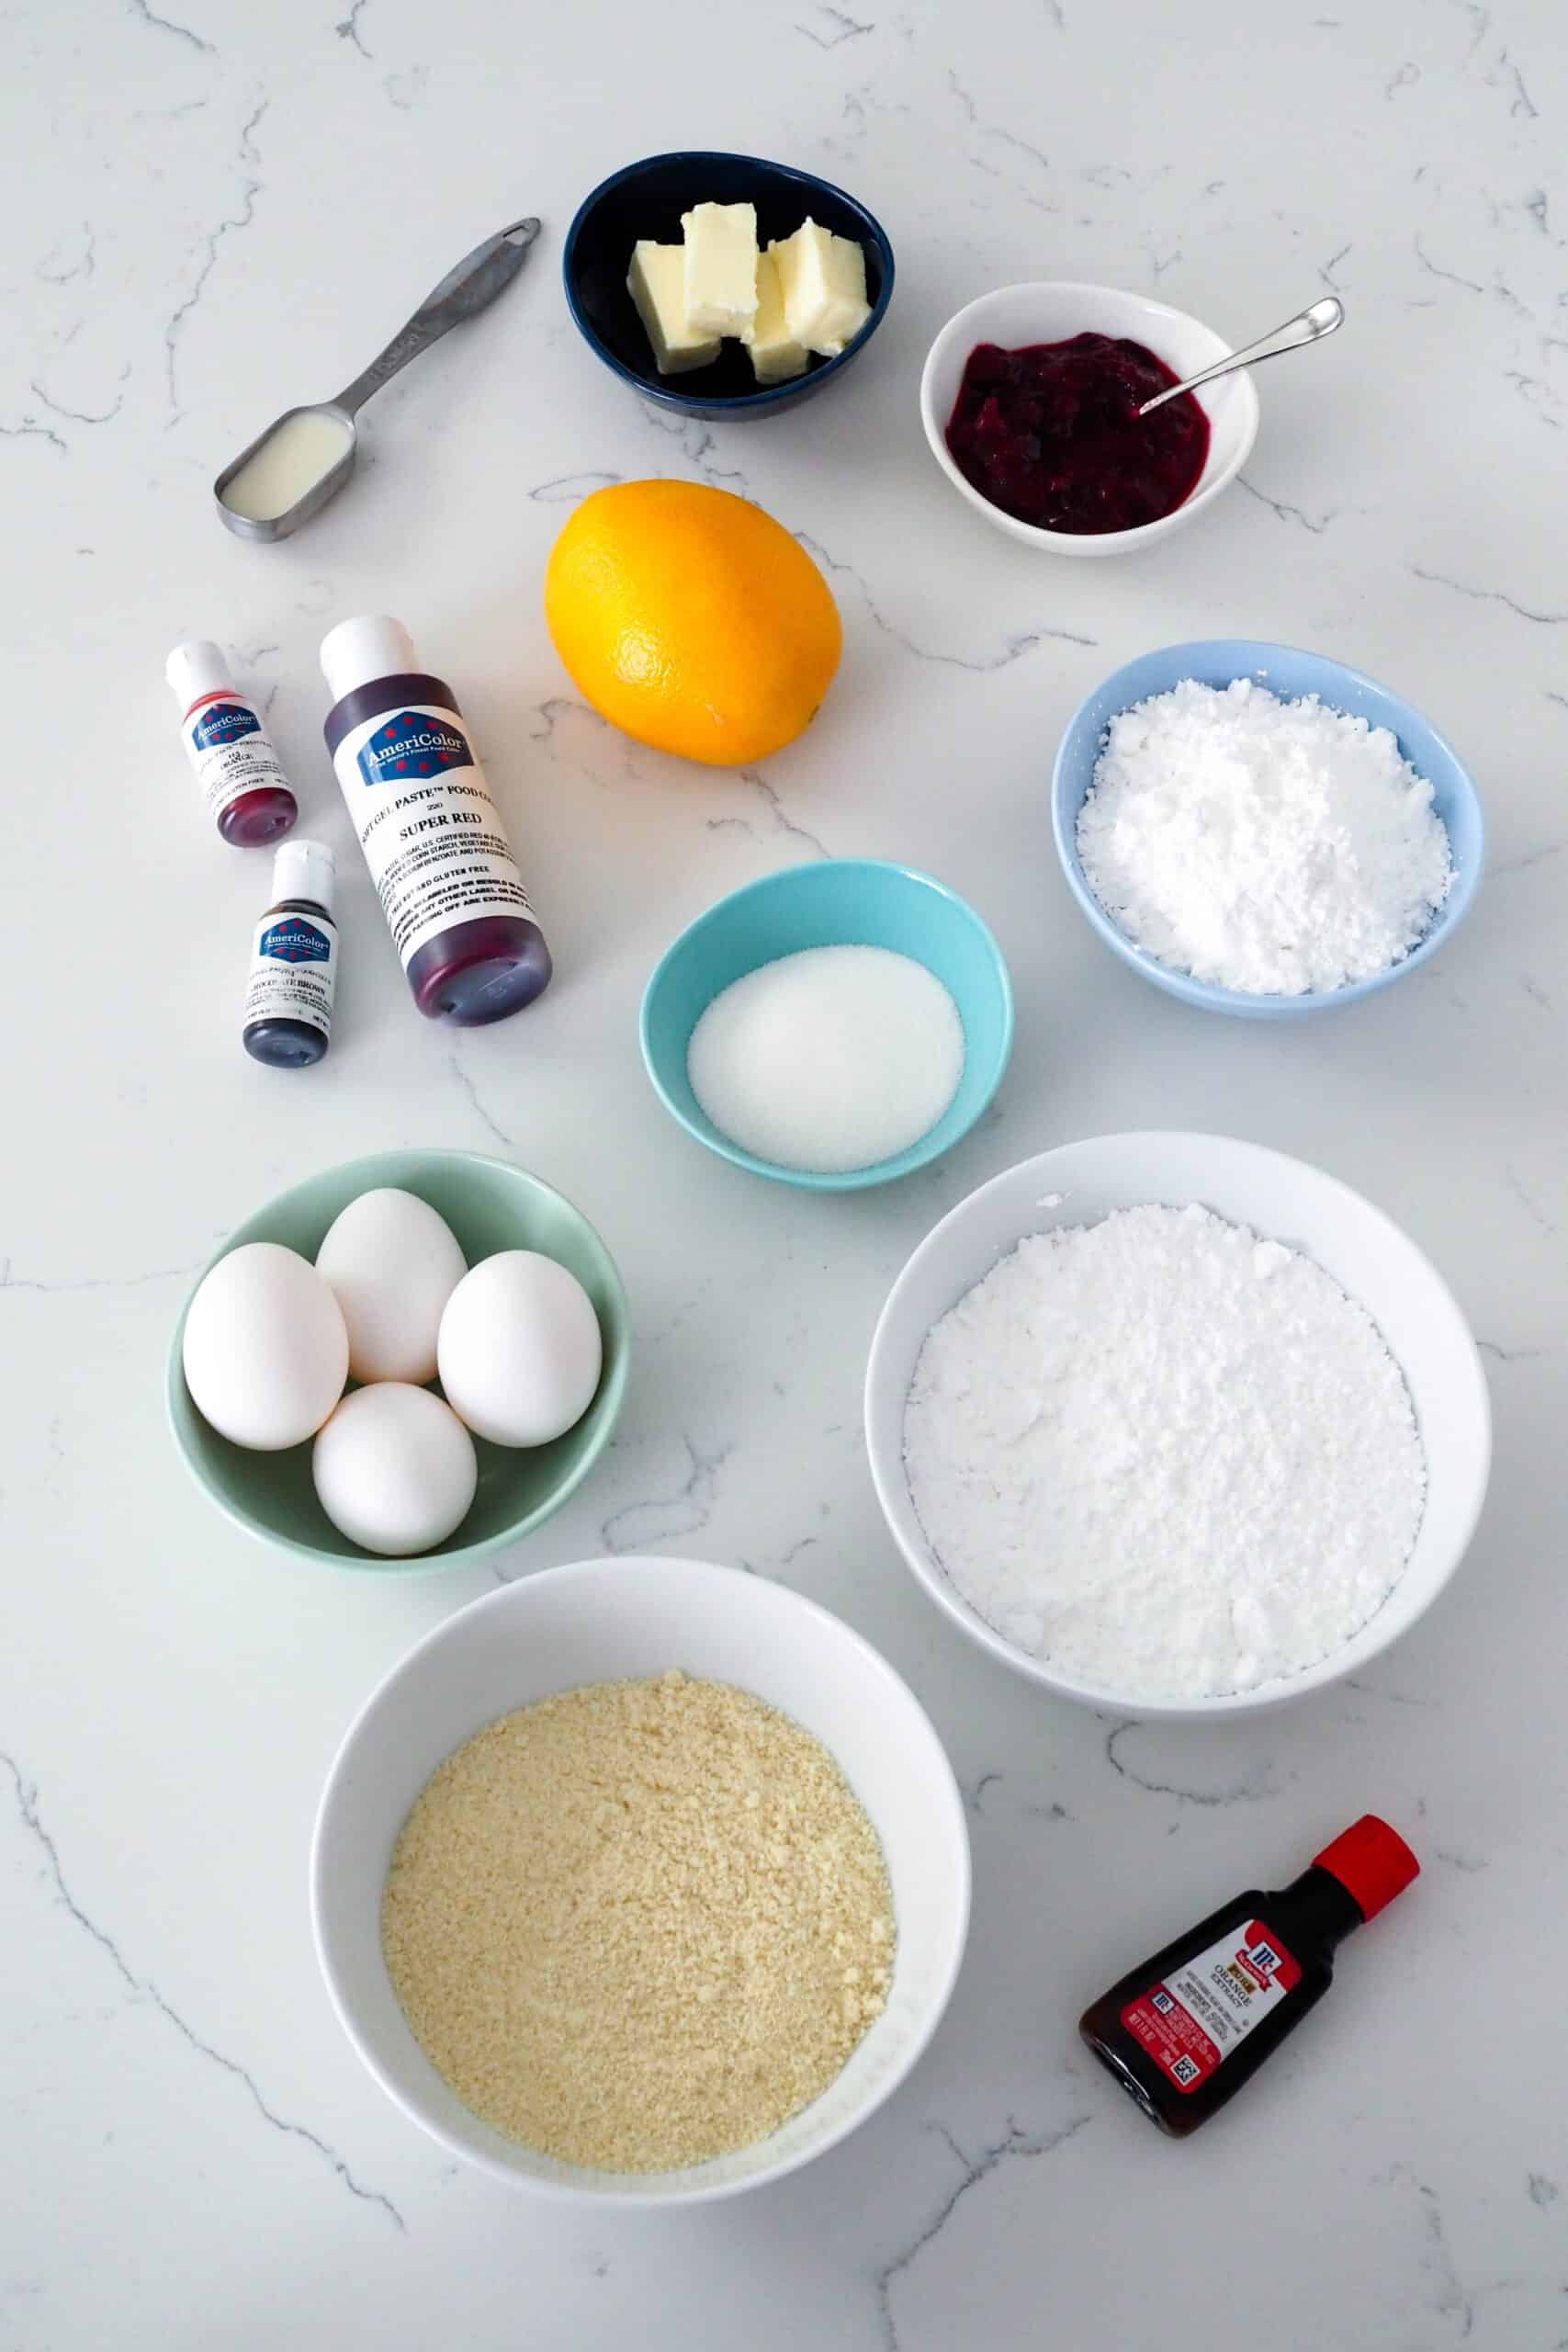 Ingredients for cranberry orange macarons arranged on a white quartz counter.